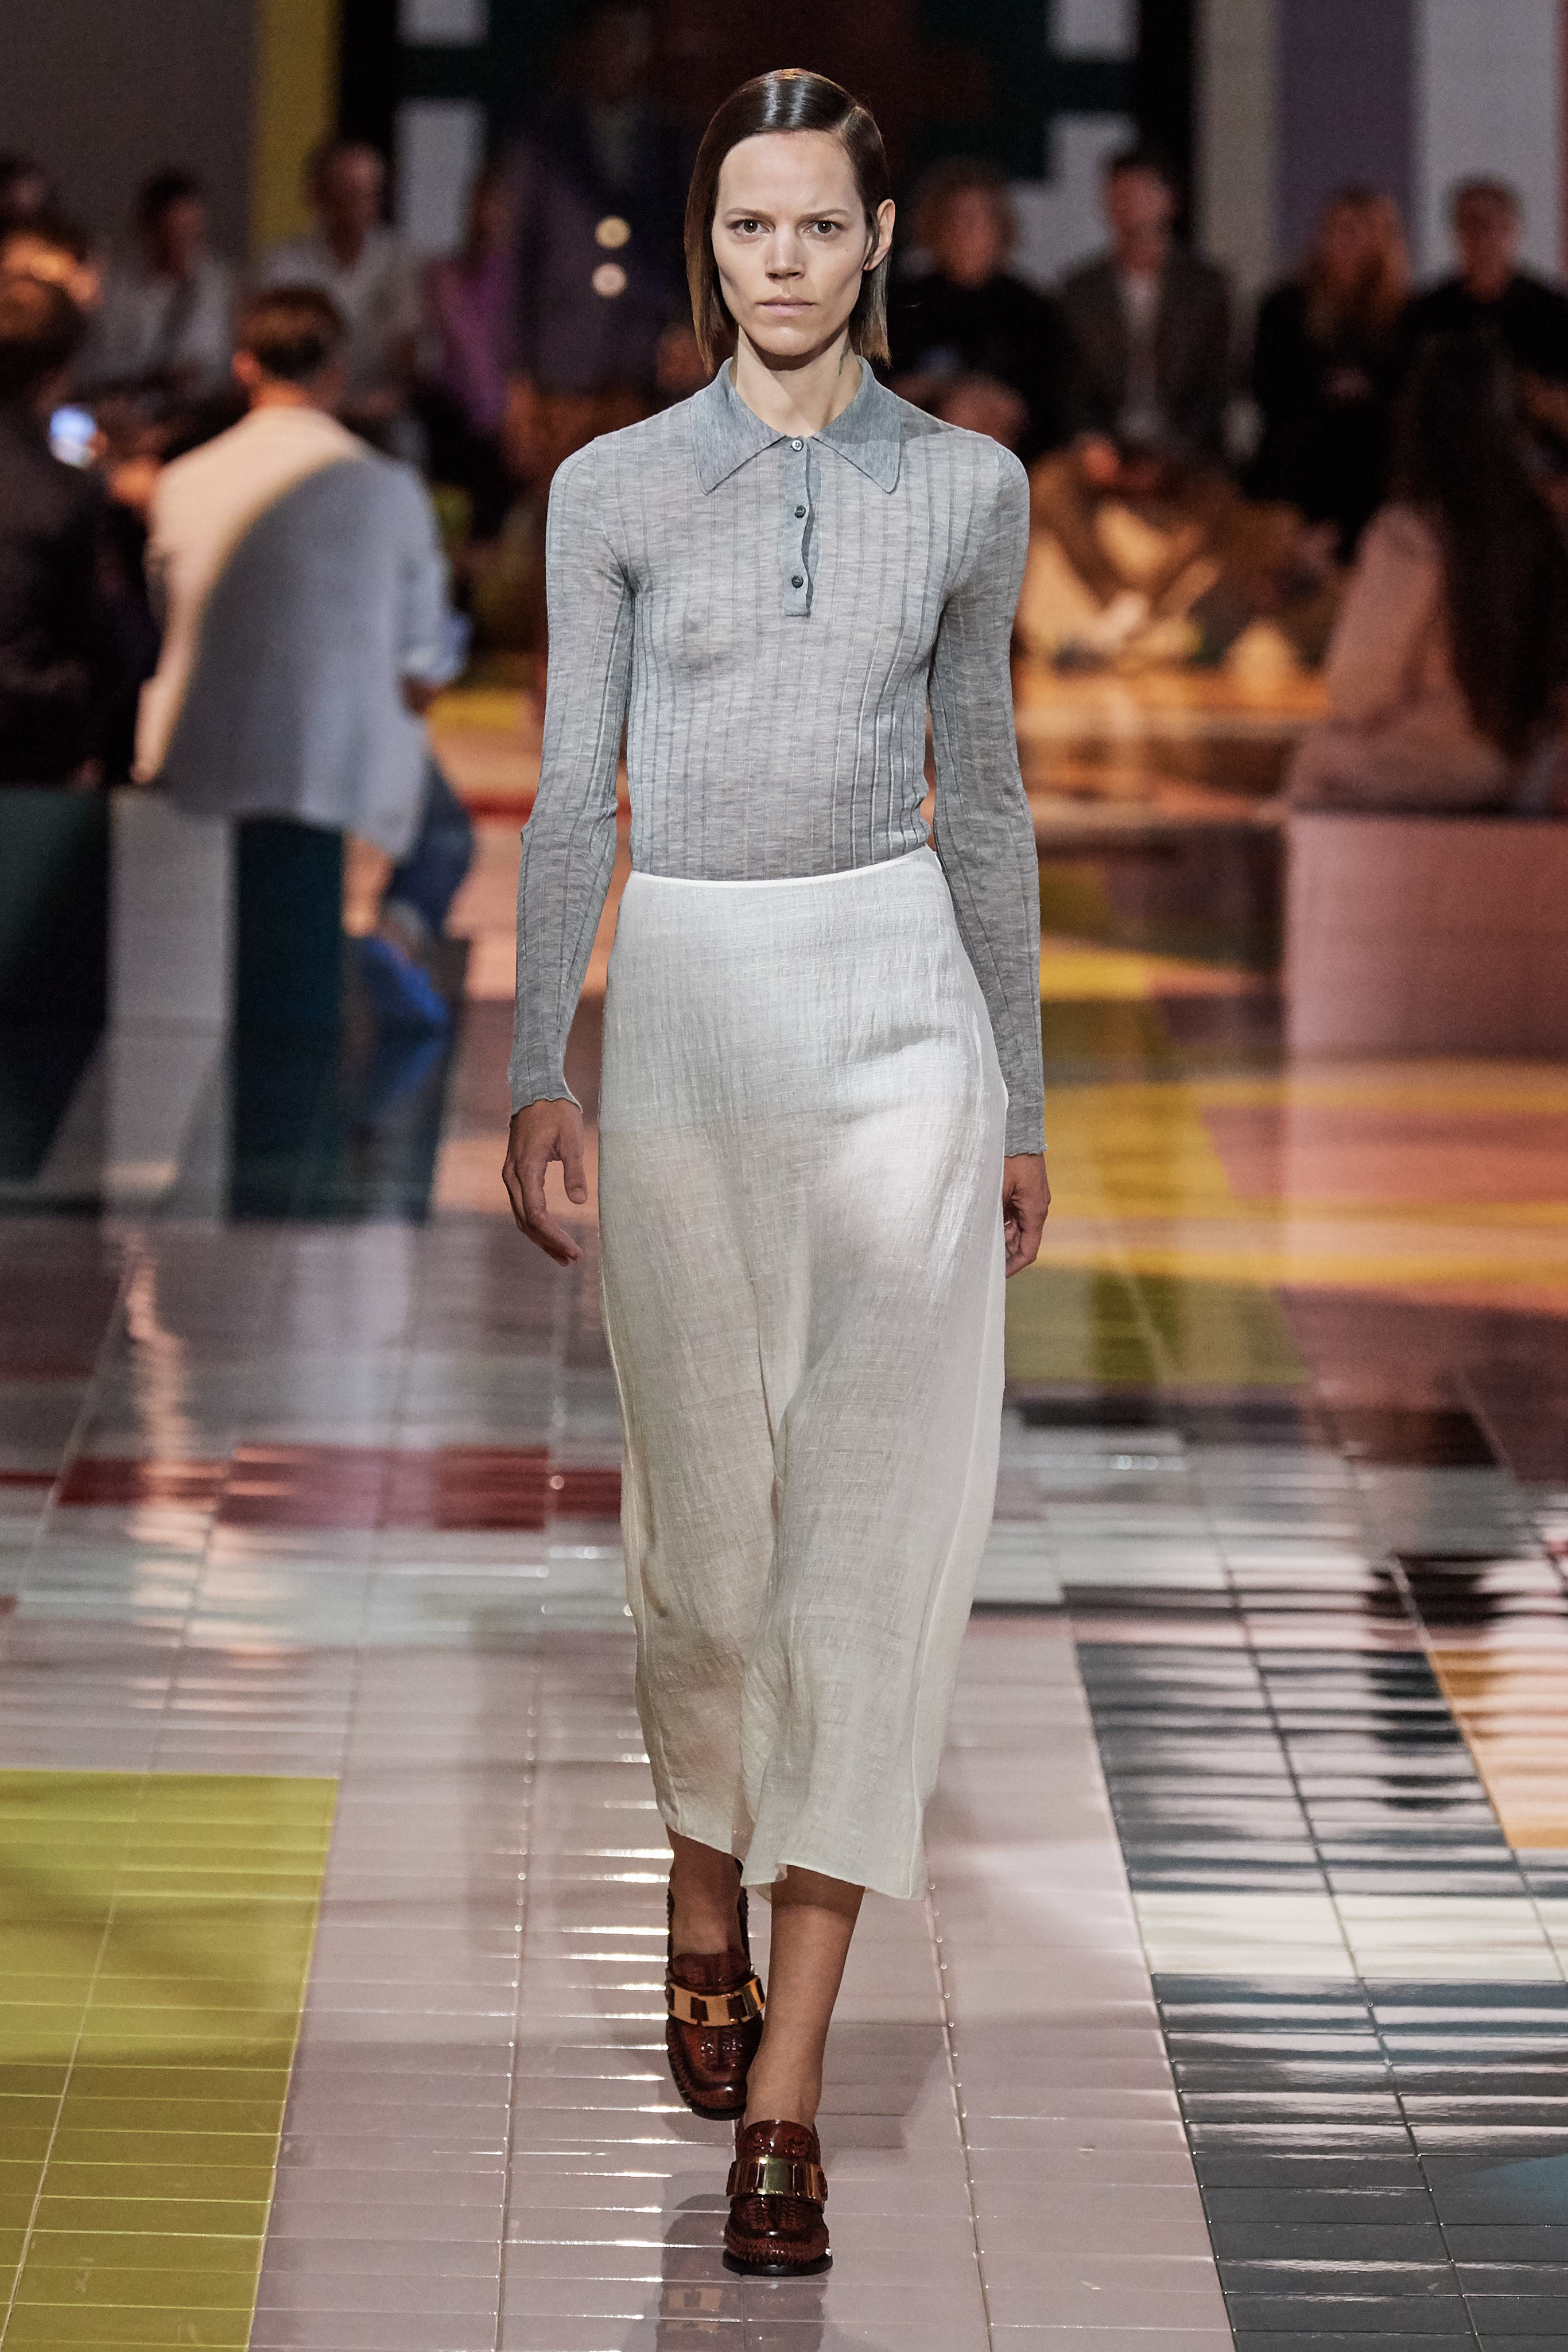 Prada Spring/Summer 2020 Womenswear Show Review